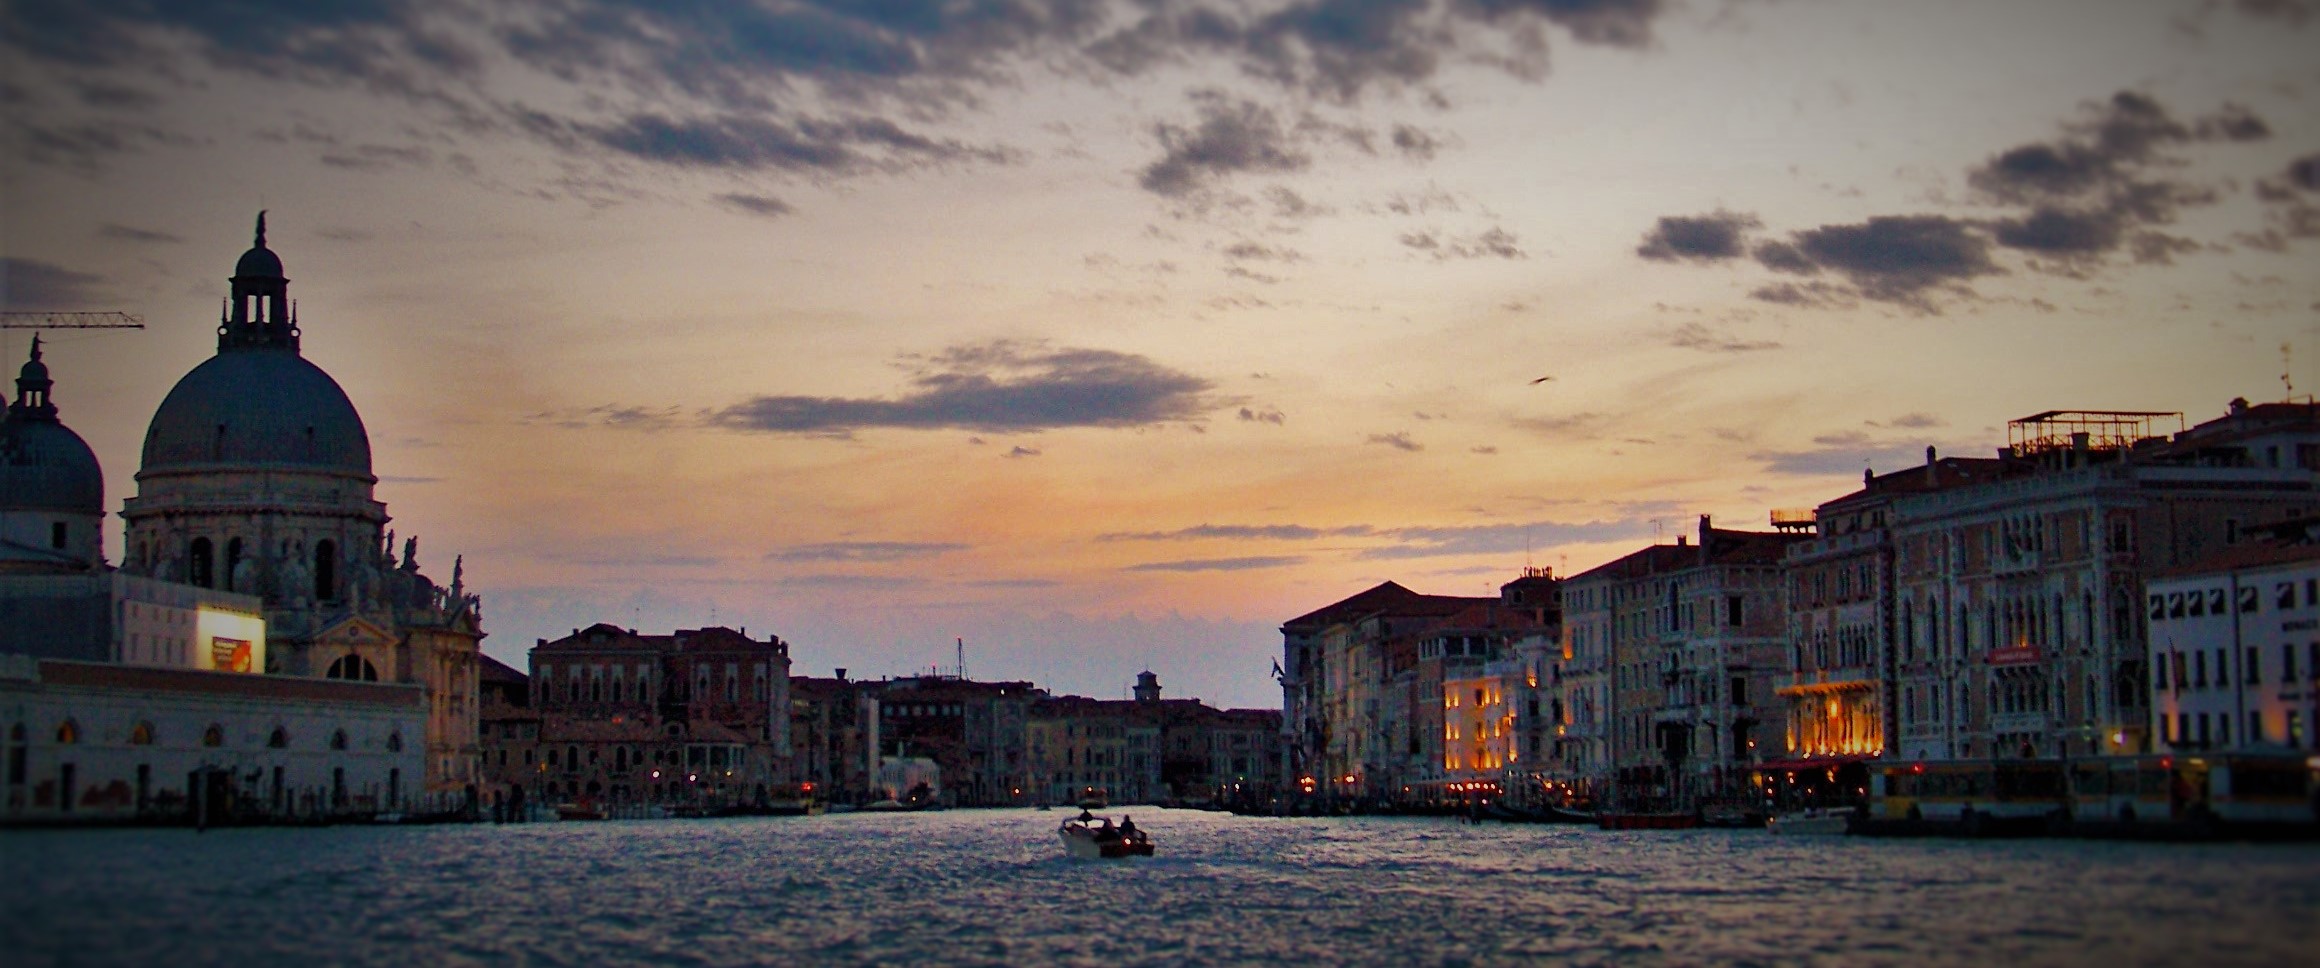 Venice Grand Canal 3 header